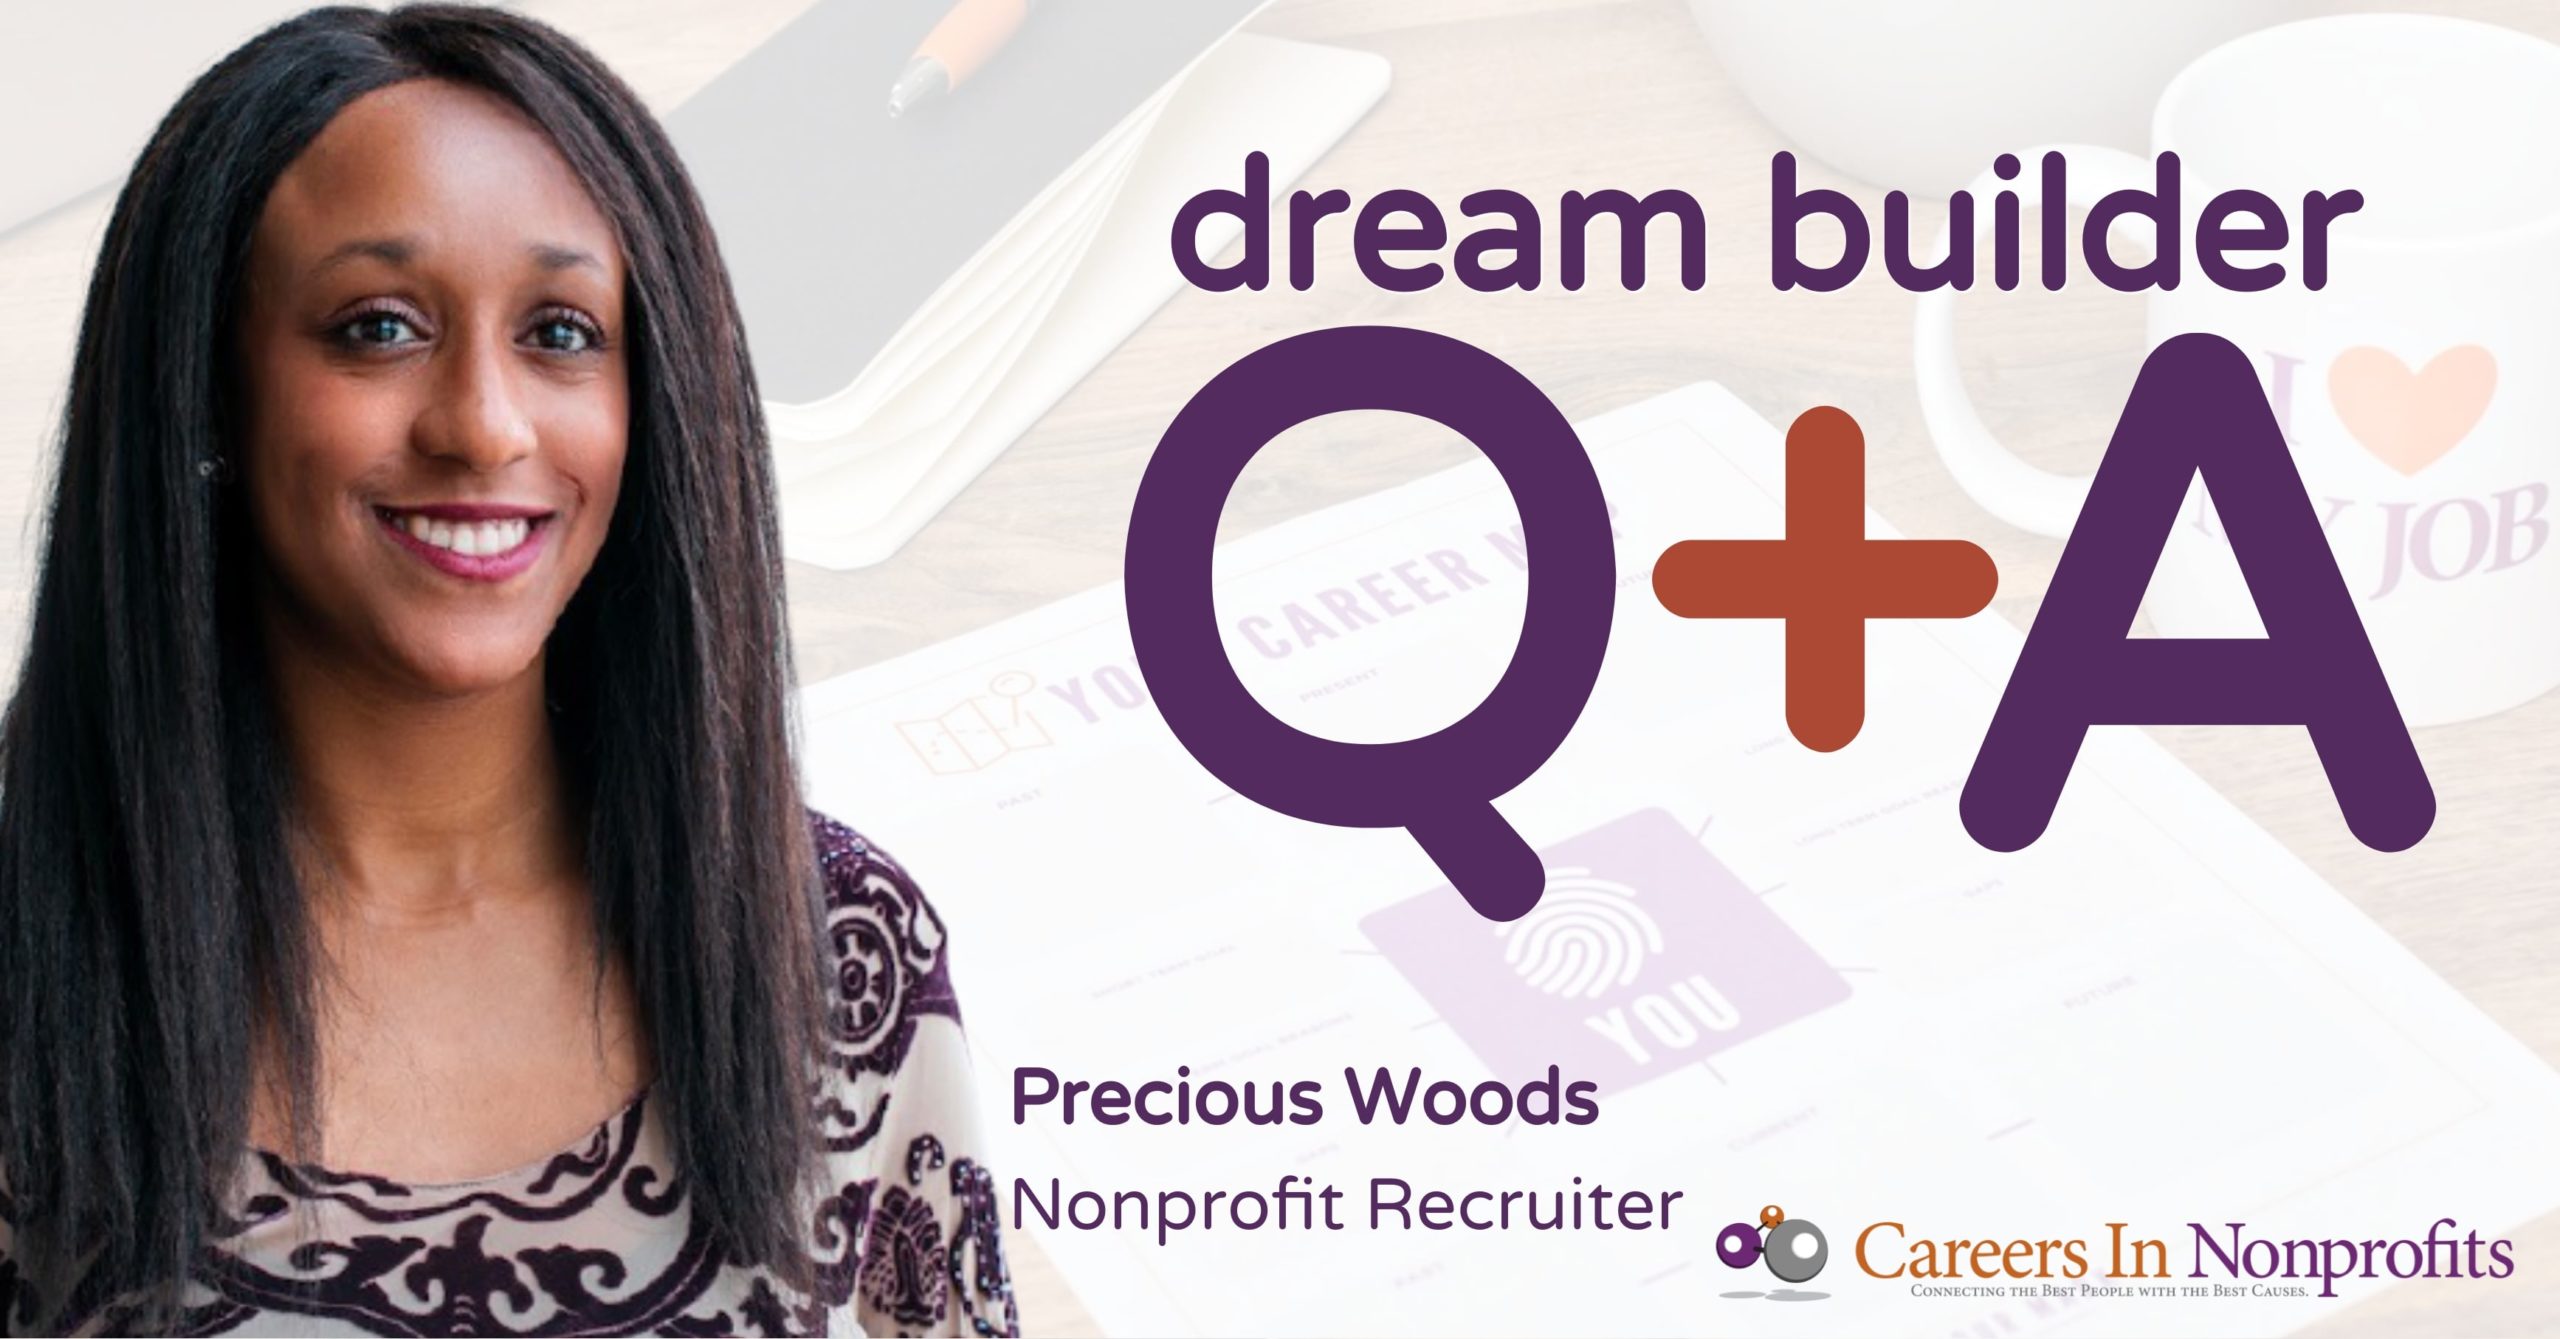 Dream Builder Q&A with Precious Woods, nonprofit recruiter